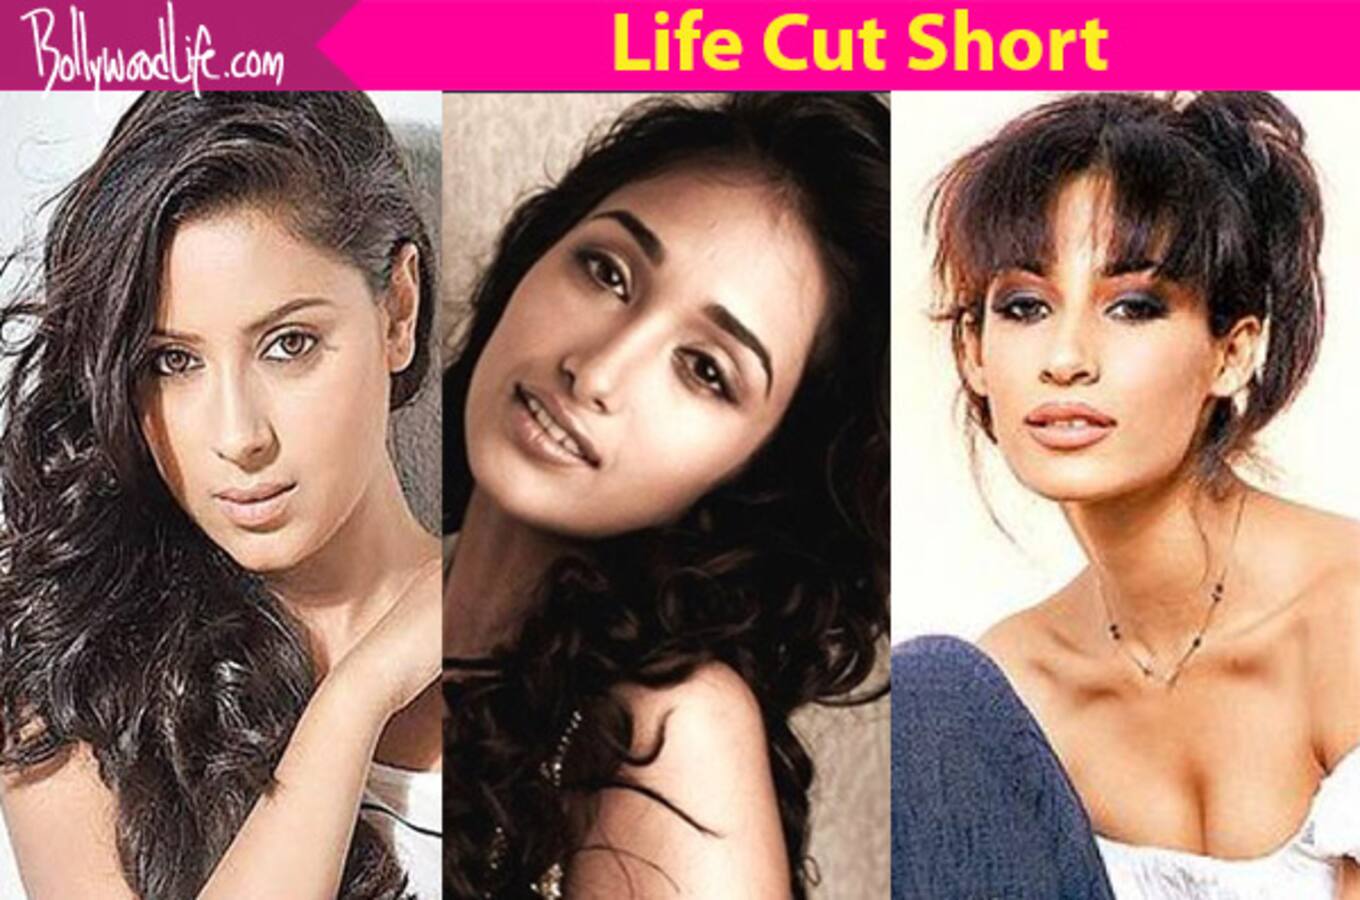 Pratyusha Banerjee, Jiah Khan, Nafisa Joseph - TV celebs who died young